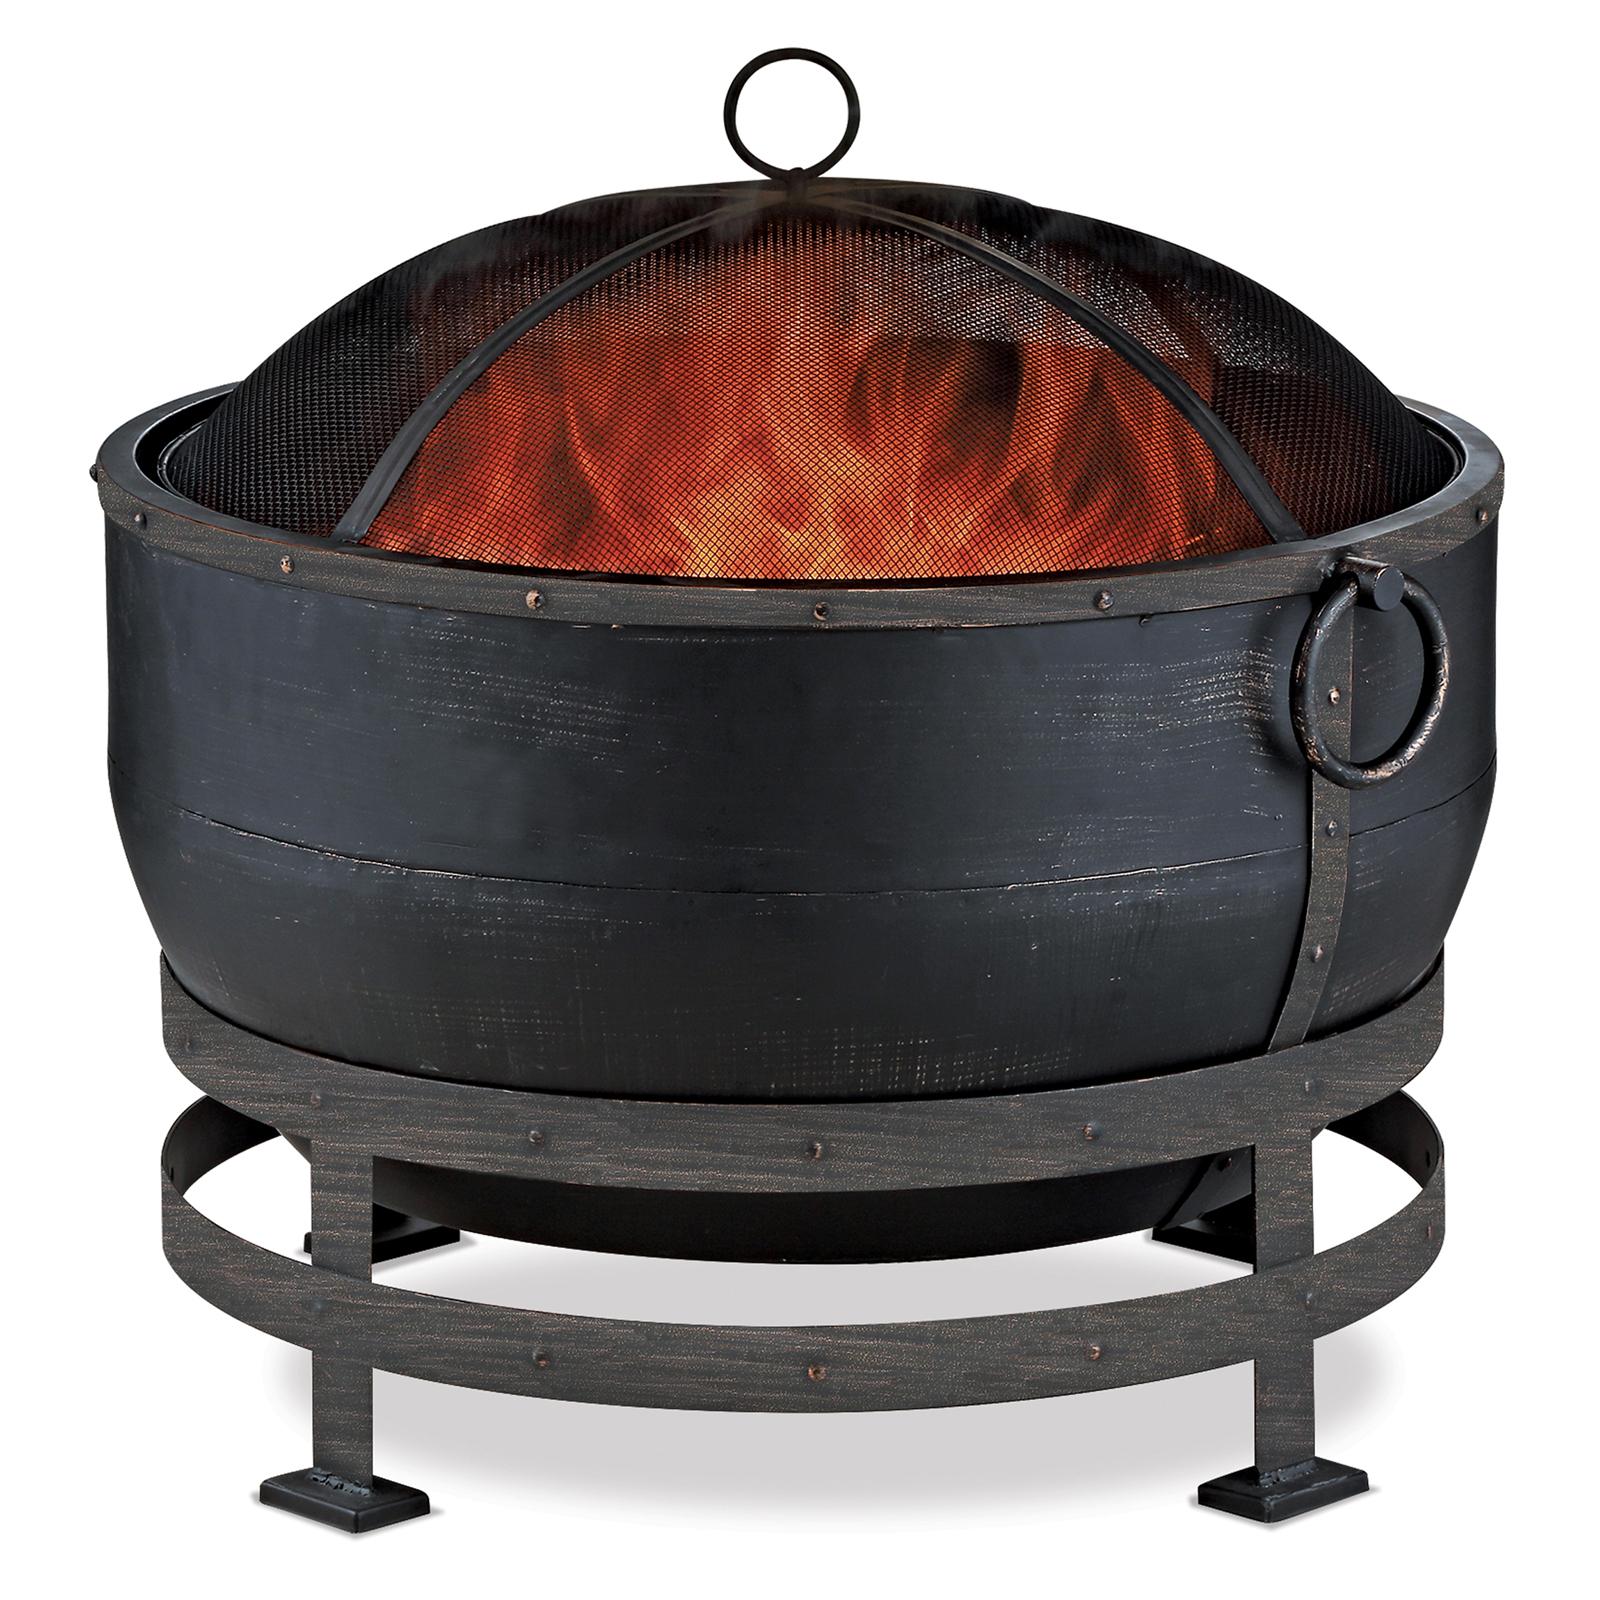 Blue Rhino Oil Rubbed Bronze Kettle Design Wood Burning Outdoor Firebowl